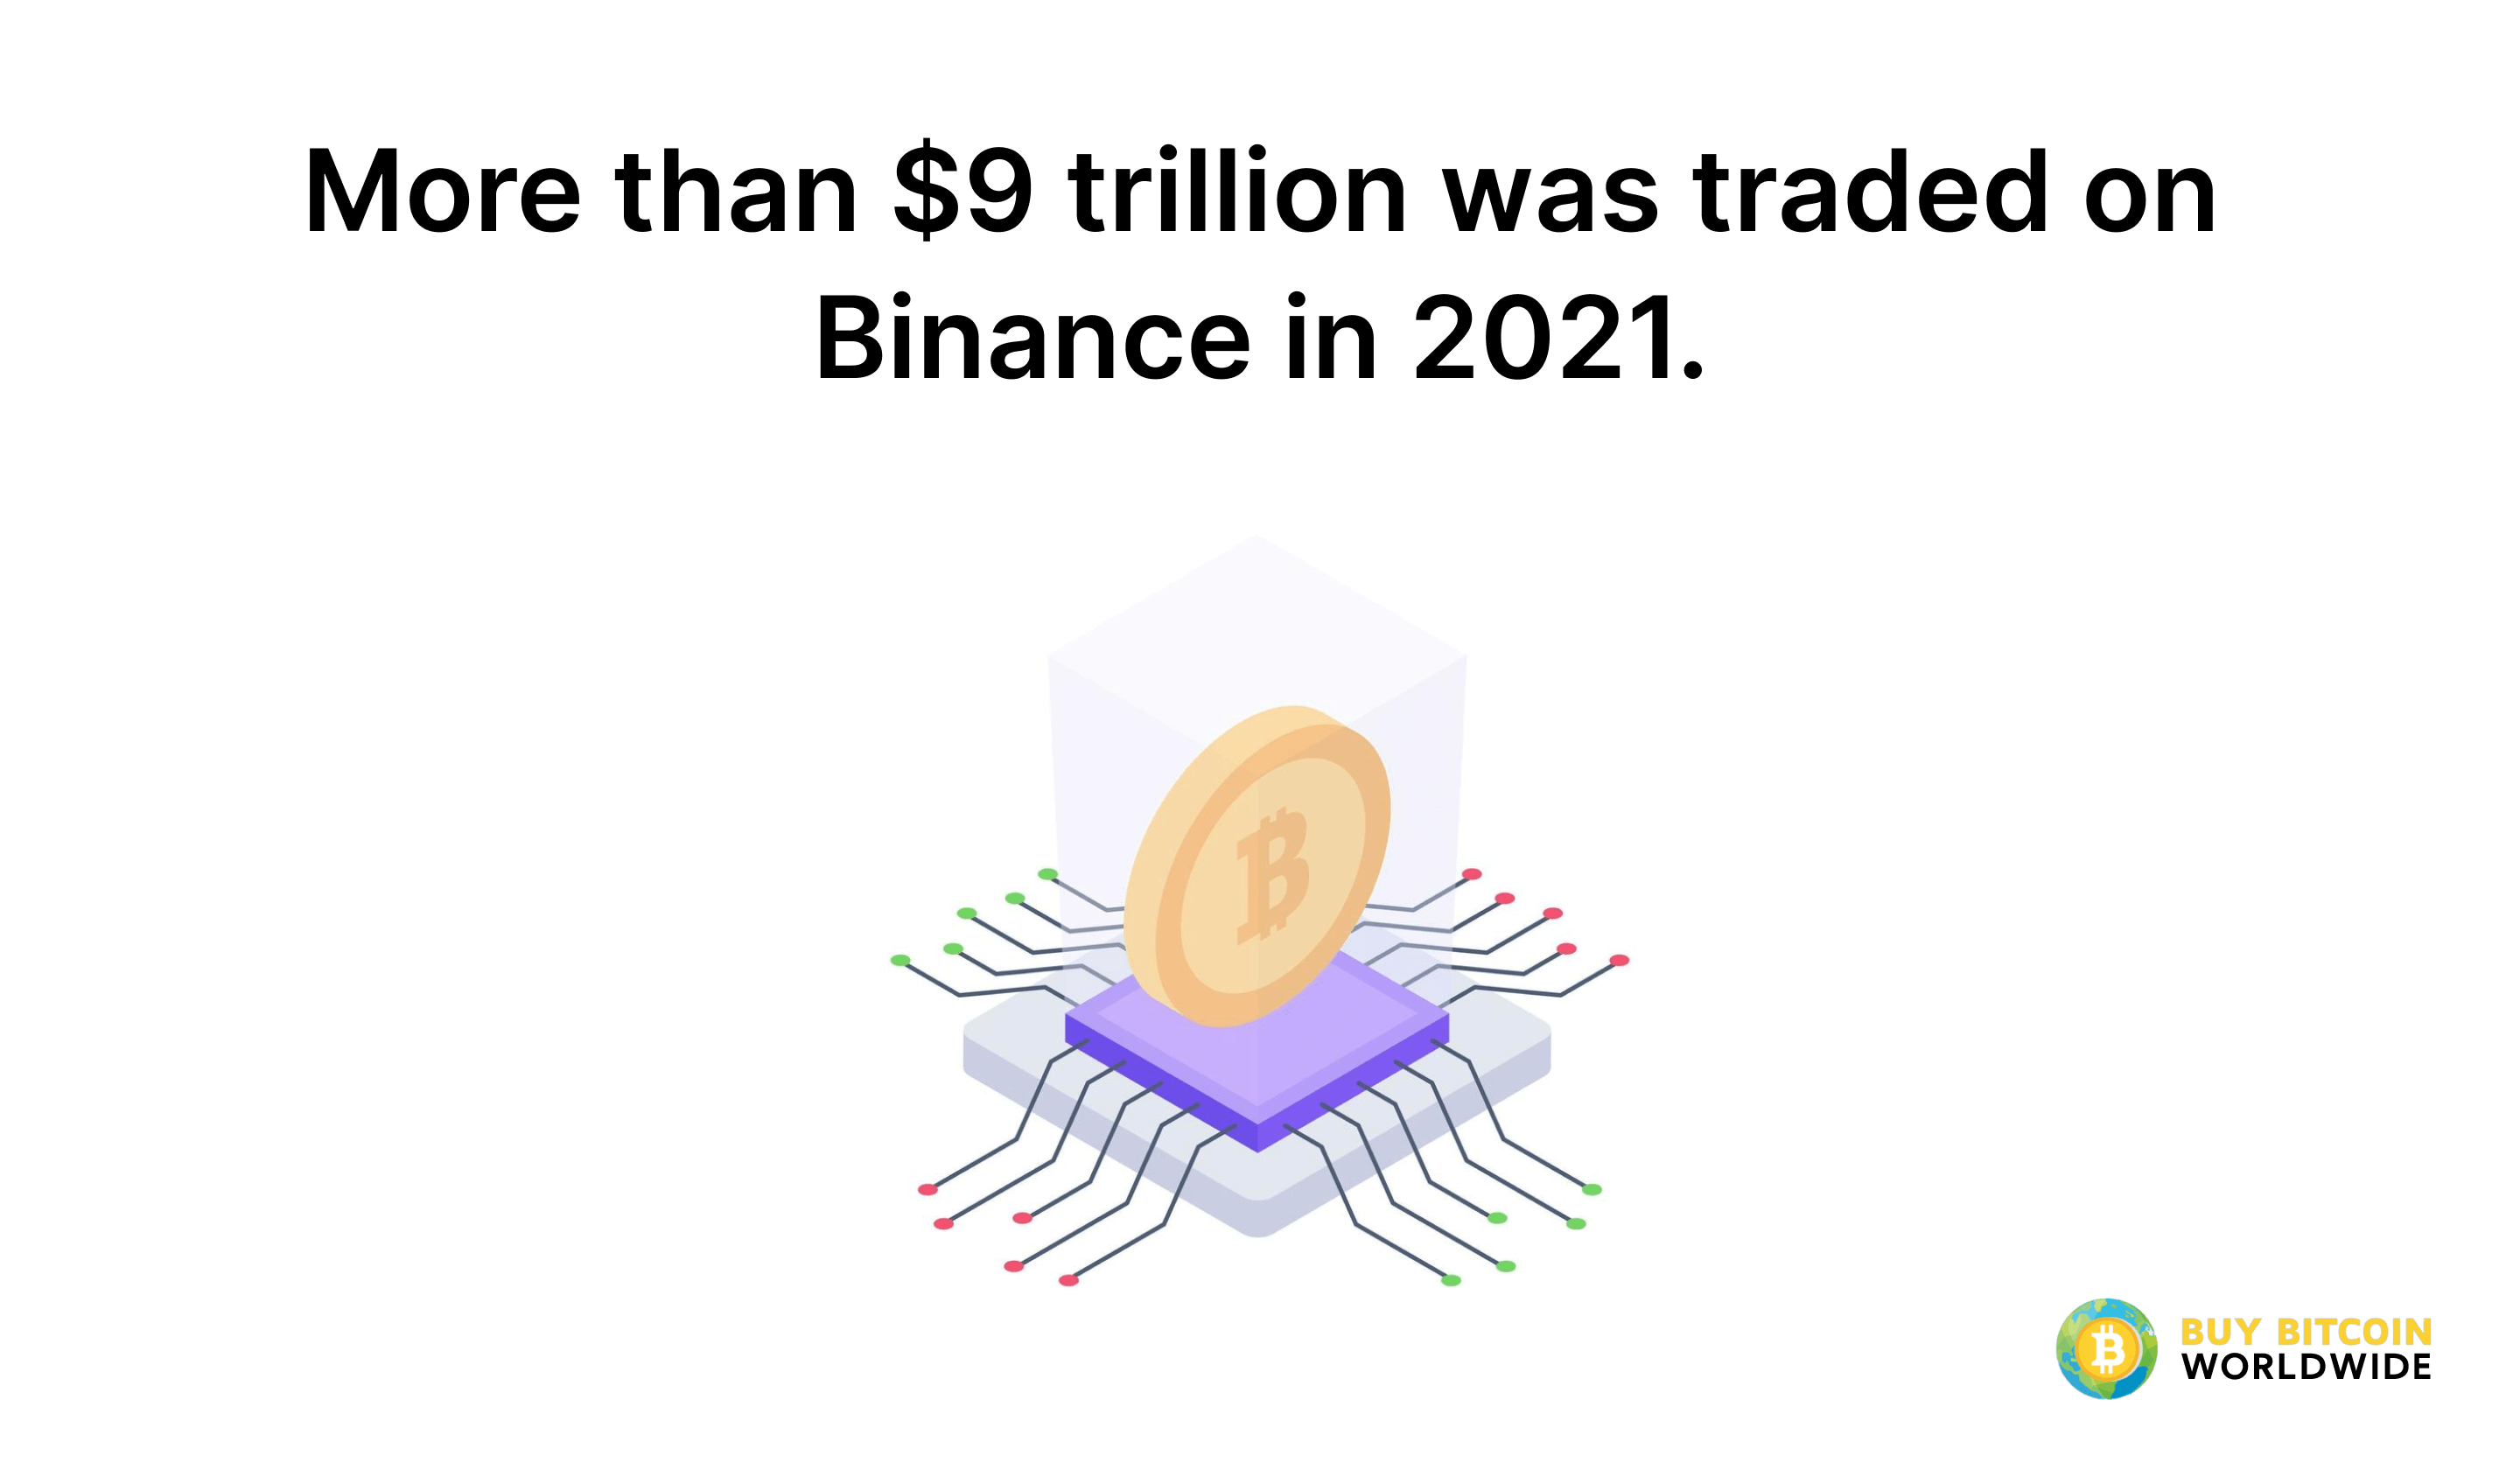 binance annual exchange volume